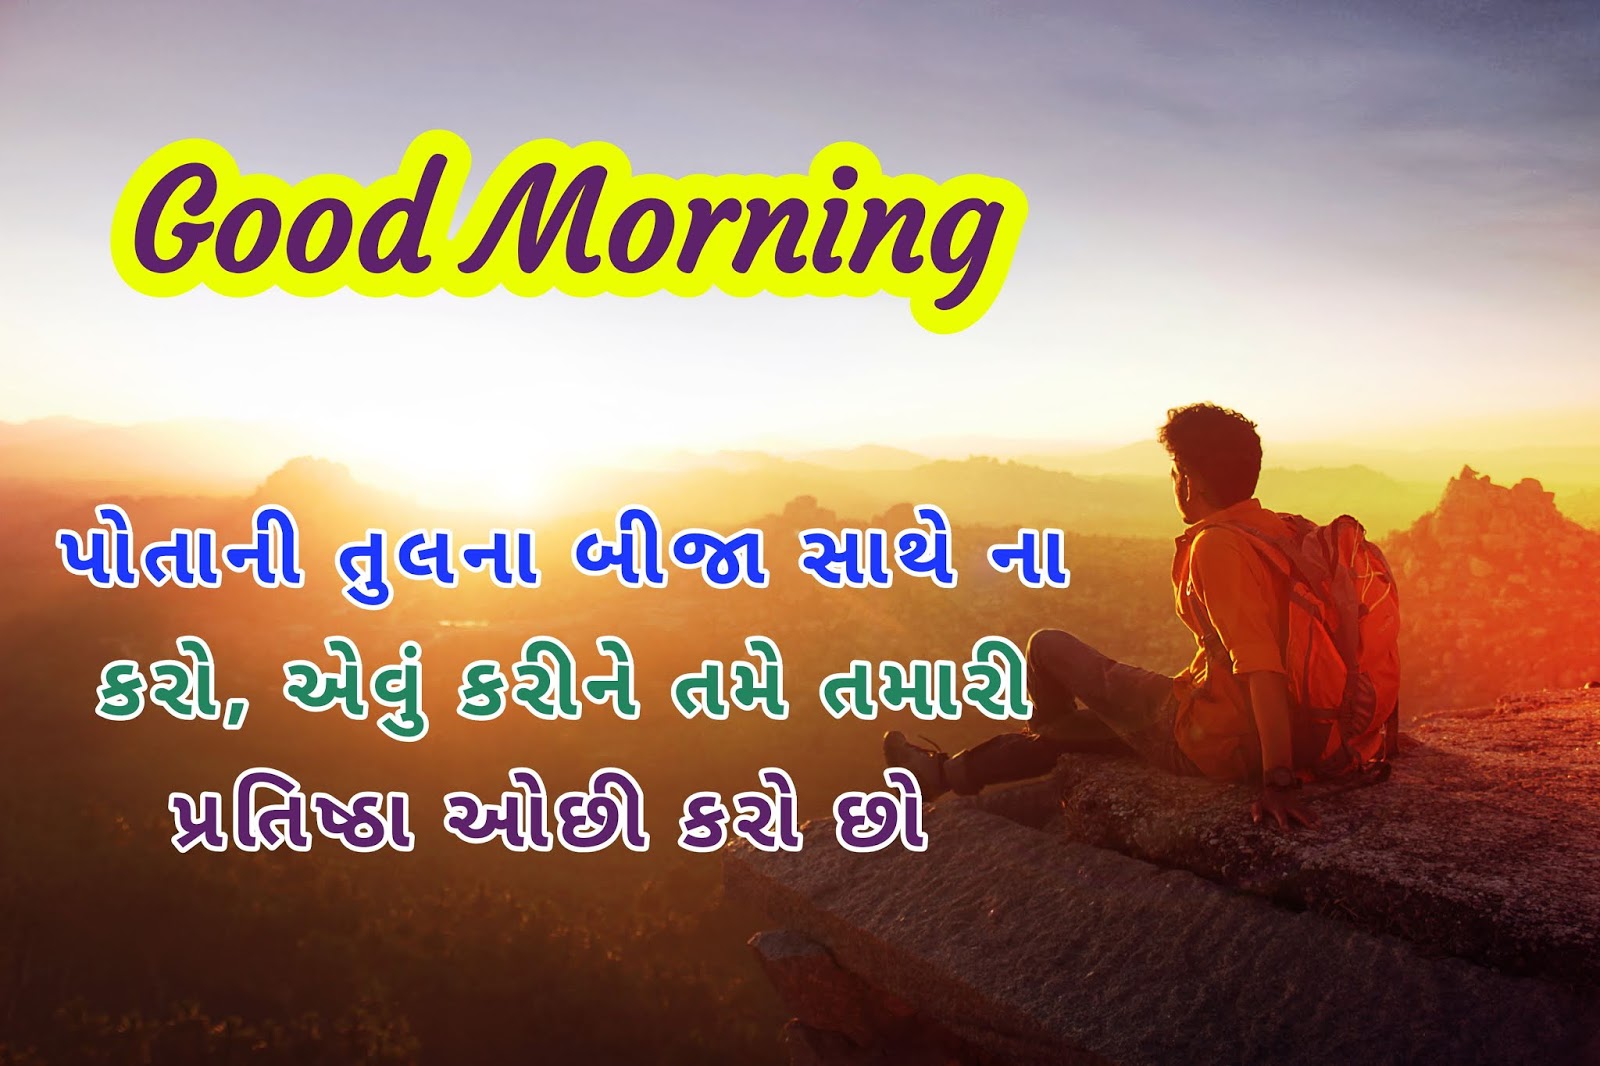 Gujarati Good morning image